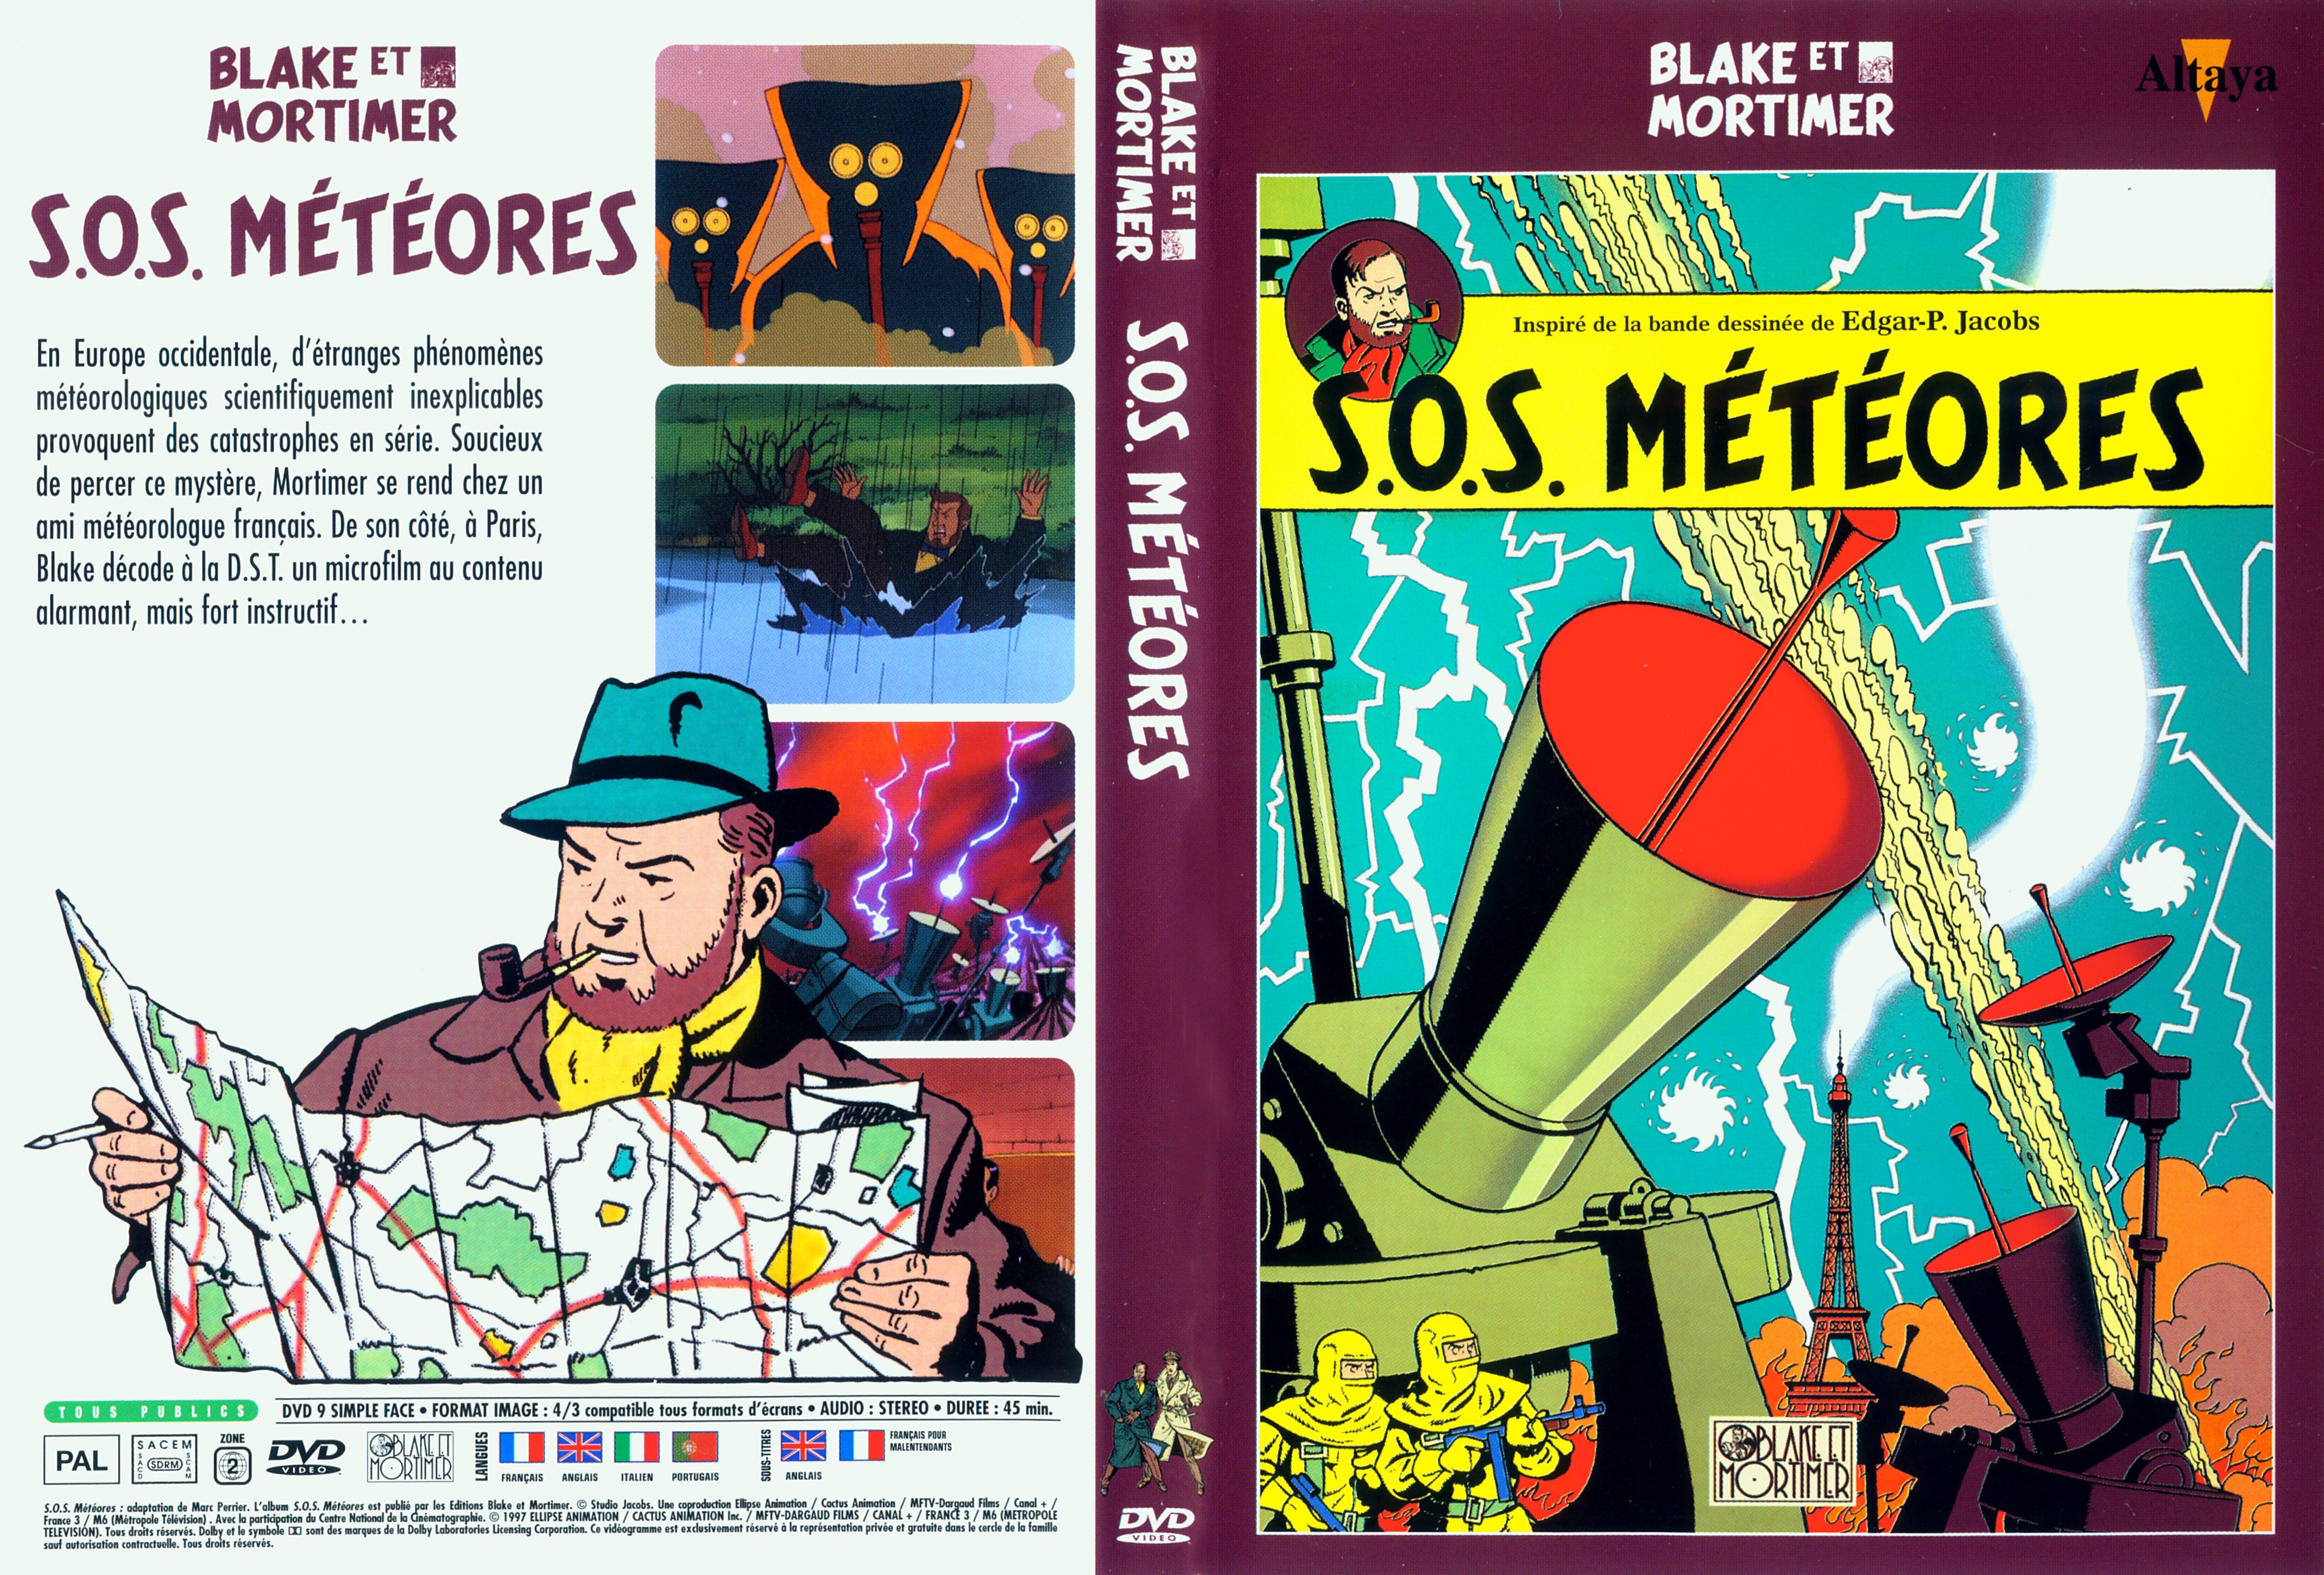 Jaquette DVD Blake et Mortimer SOS Meteores